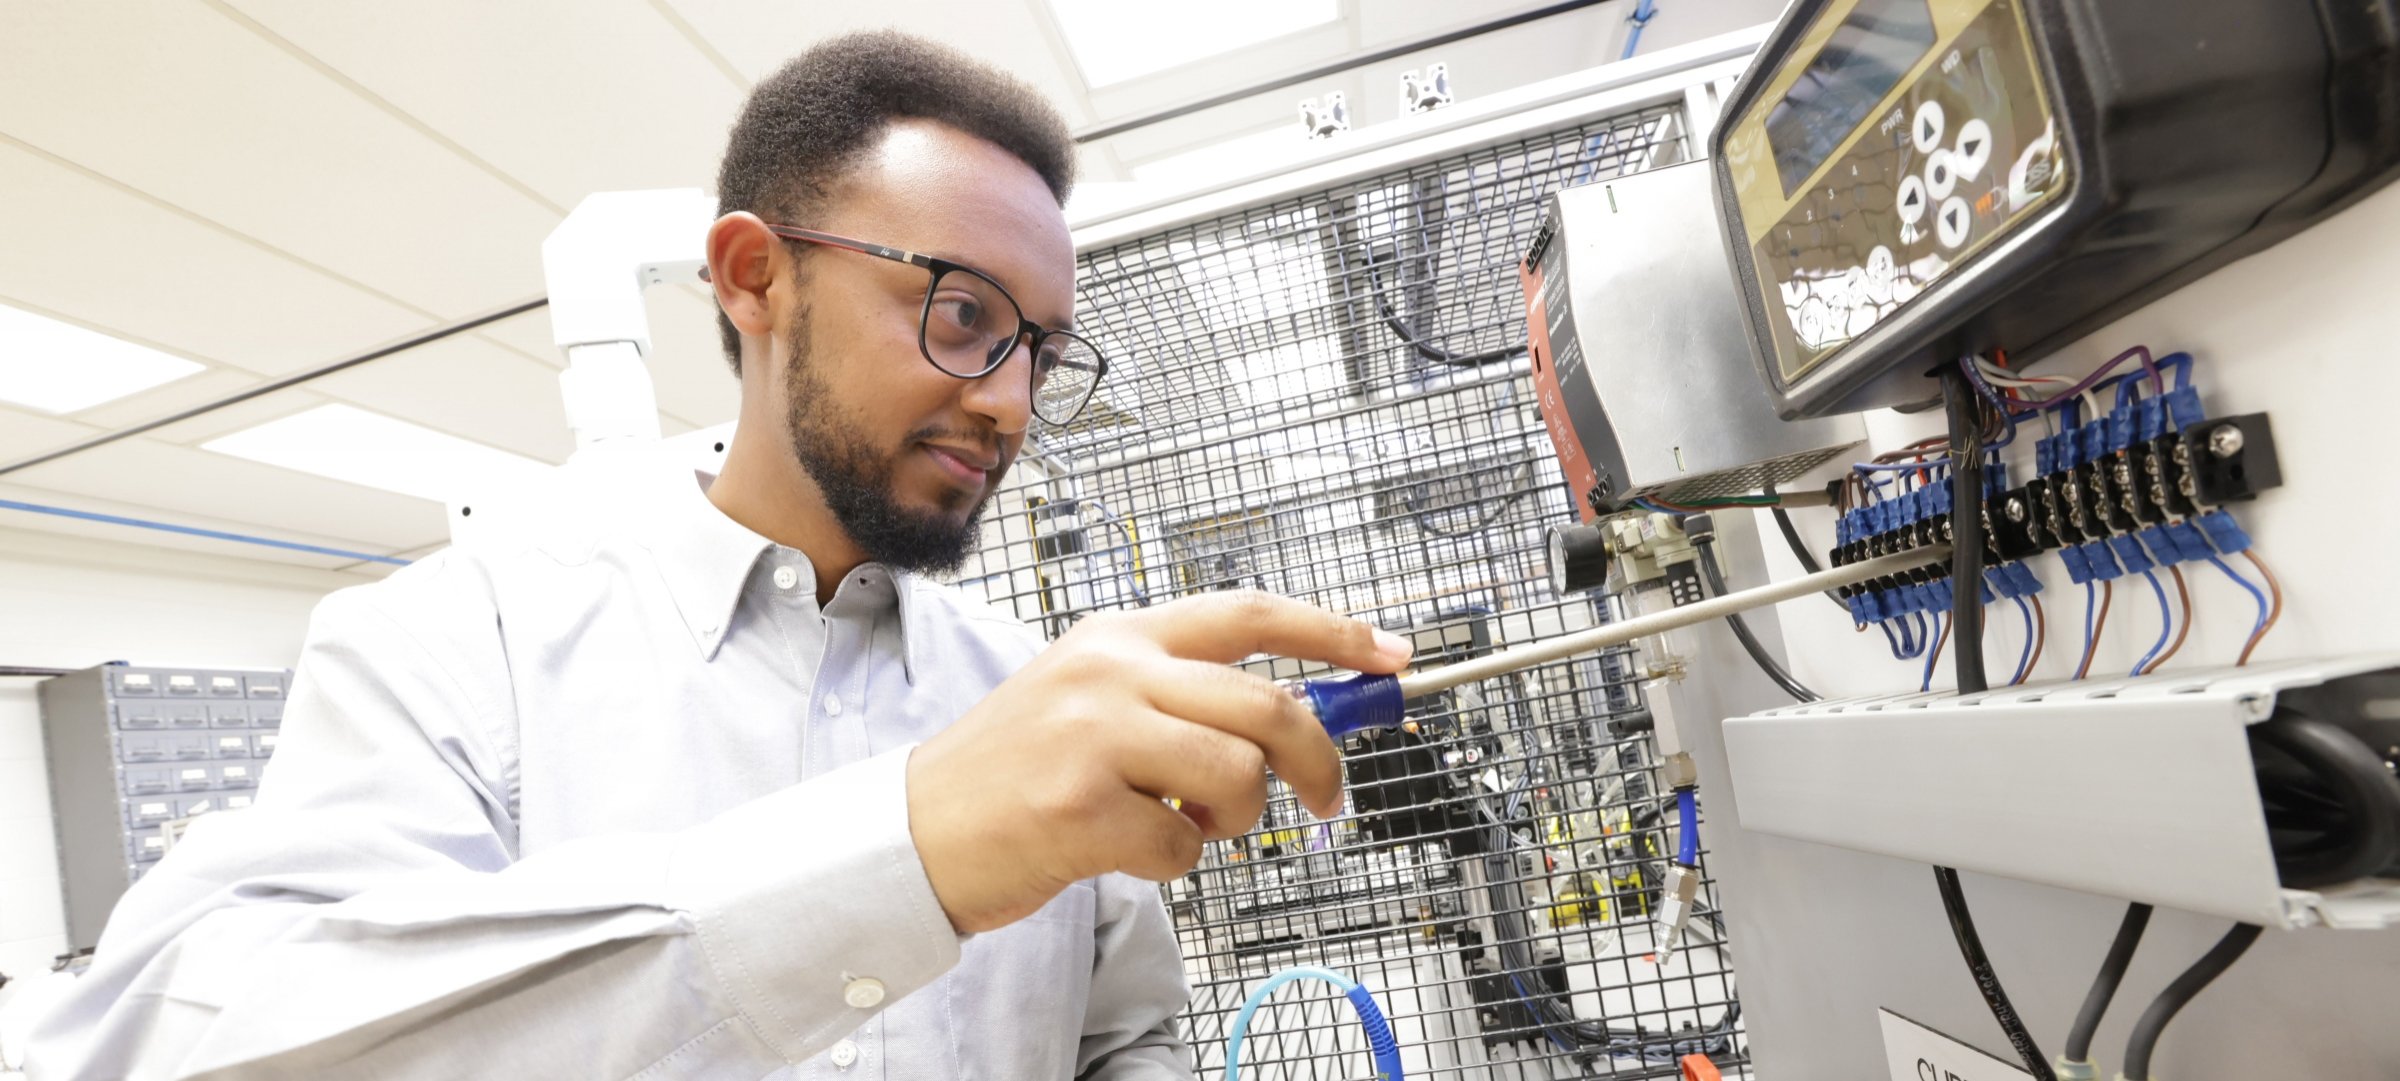 A Michigan Tech student operates industry-standard mechatronics equipment